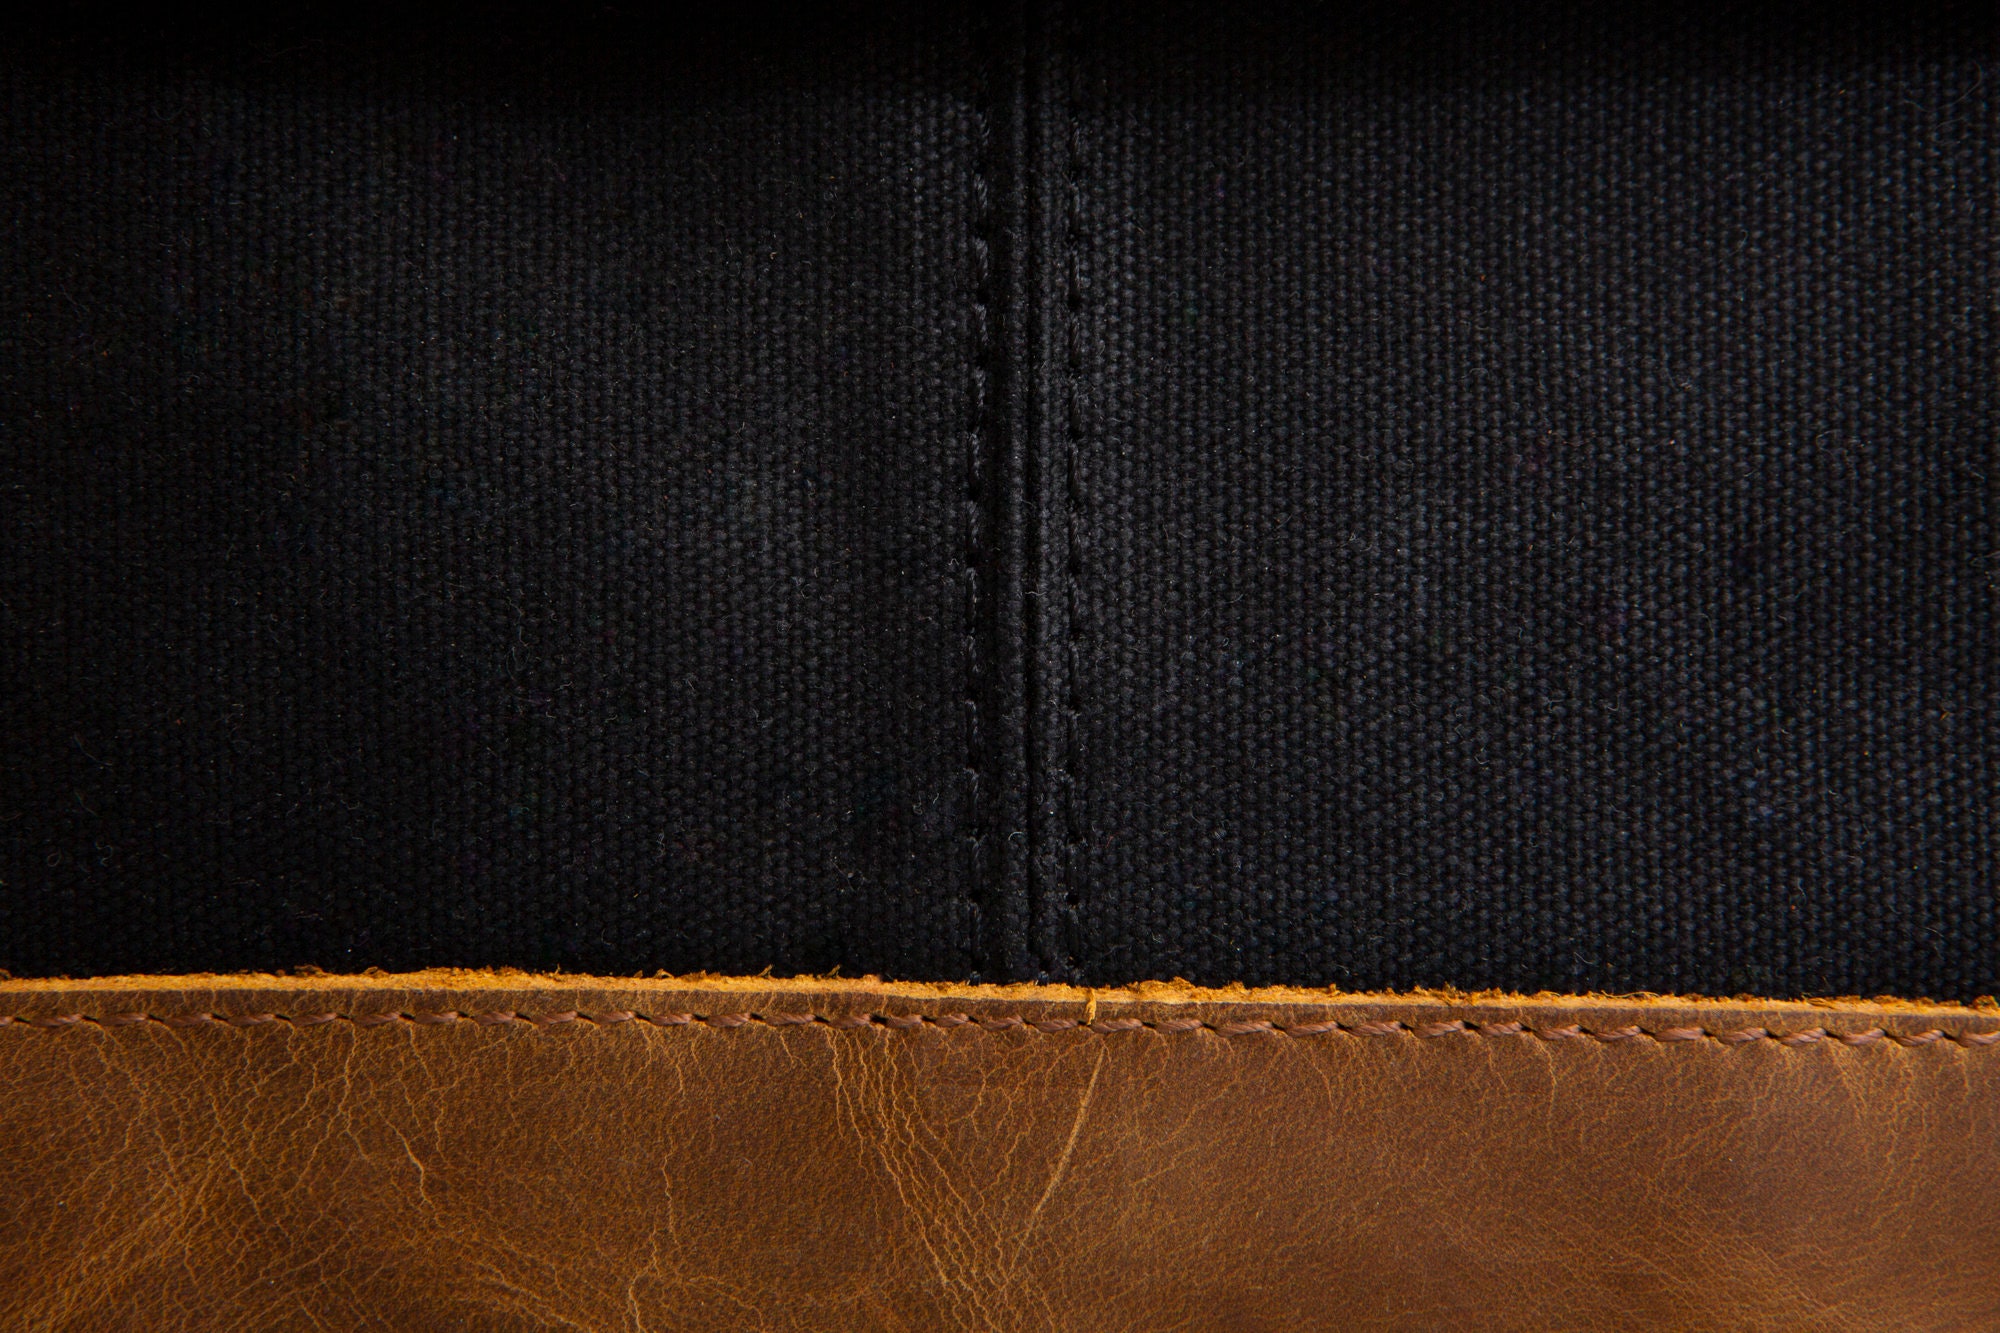 Medway Messenger Bag Durable Leather Canvas Bag Stylish 